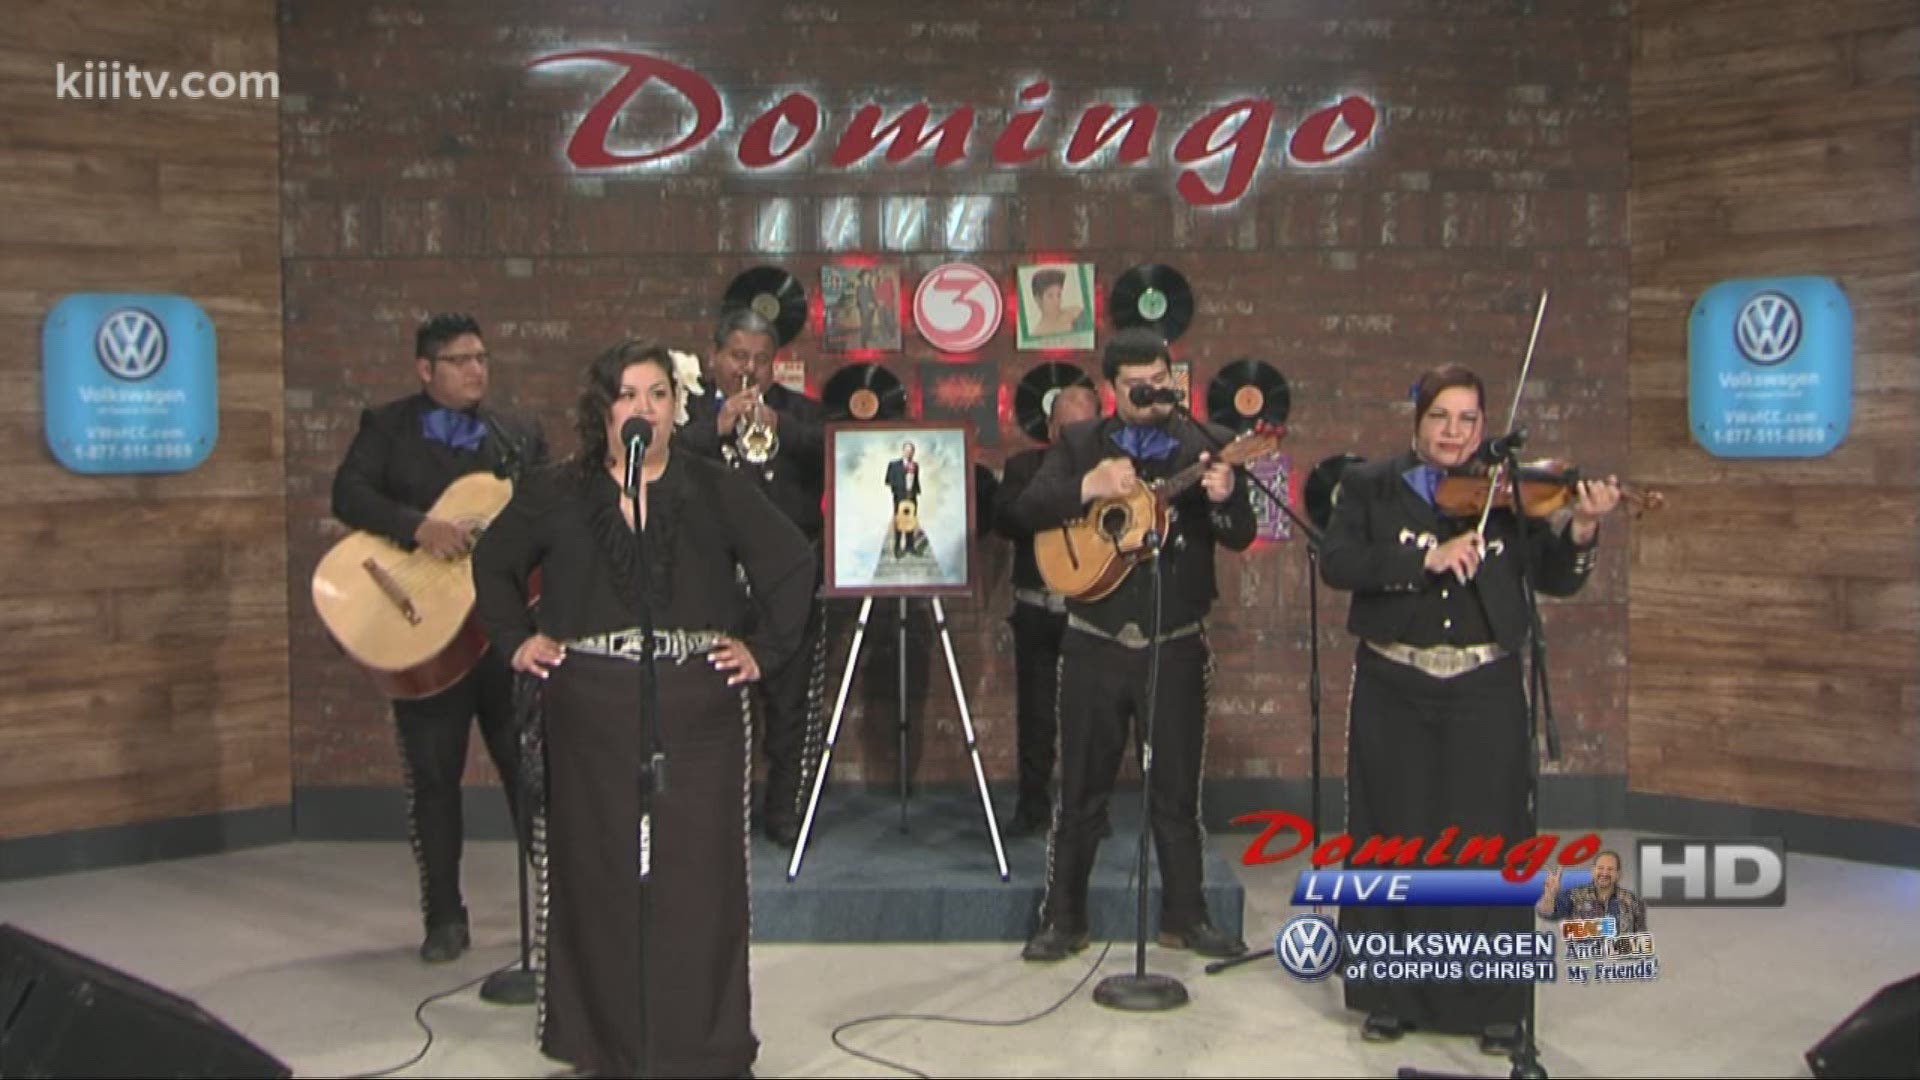 Los Mariachis CC performing "Amor Eterno" on Domingo Live.